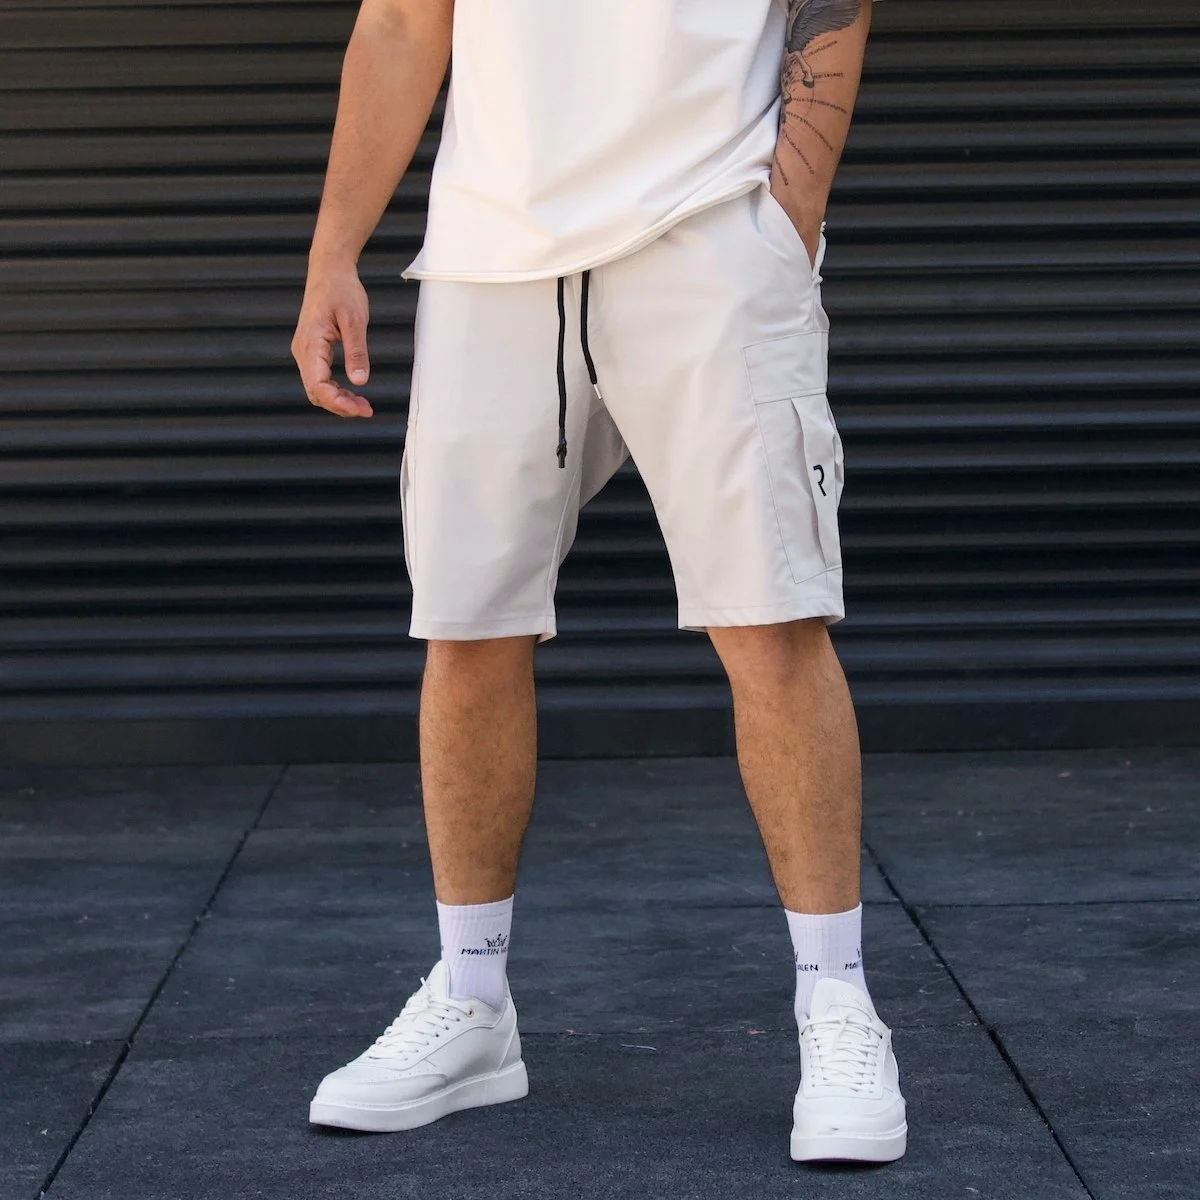 Designer Shorts for Men Elevate Your Summer Style